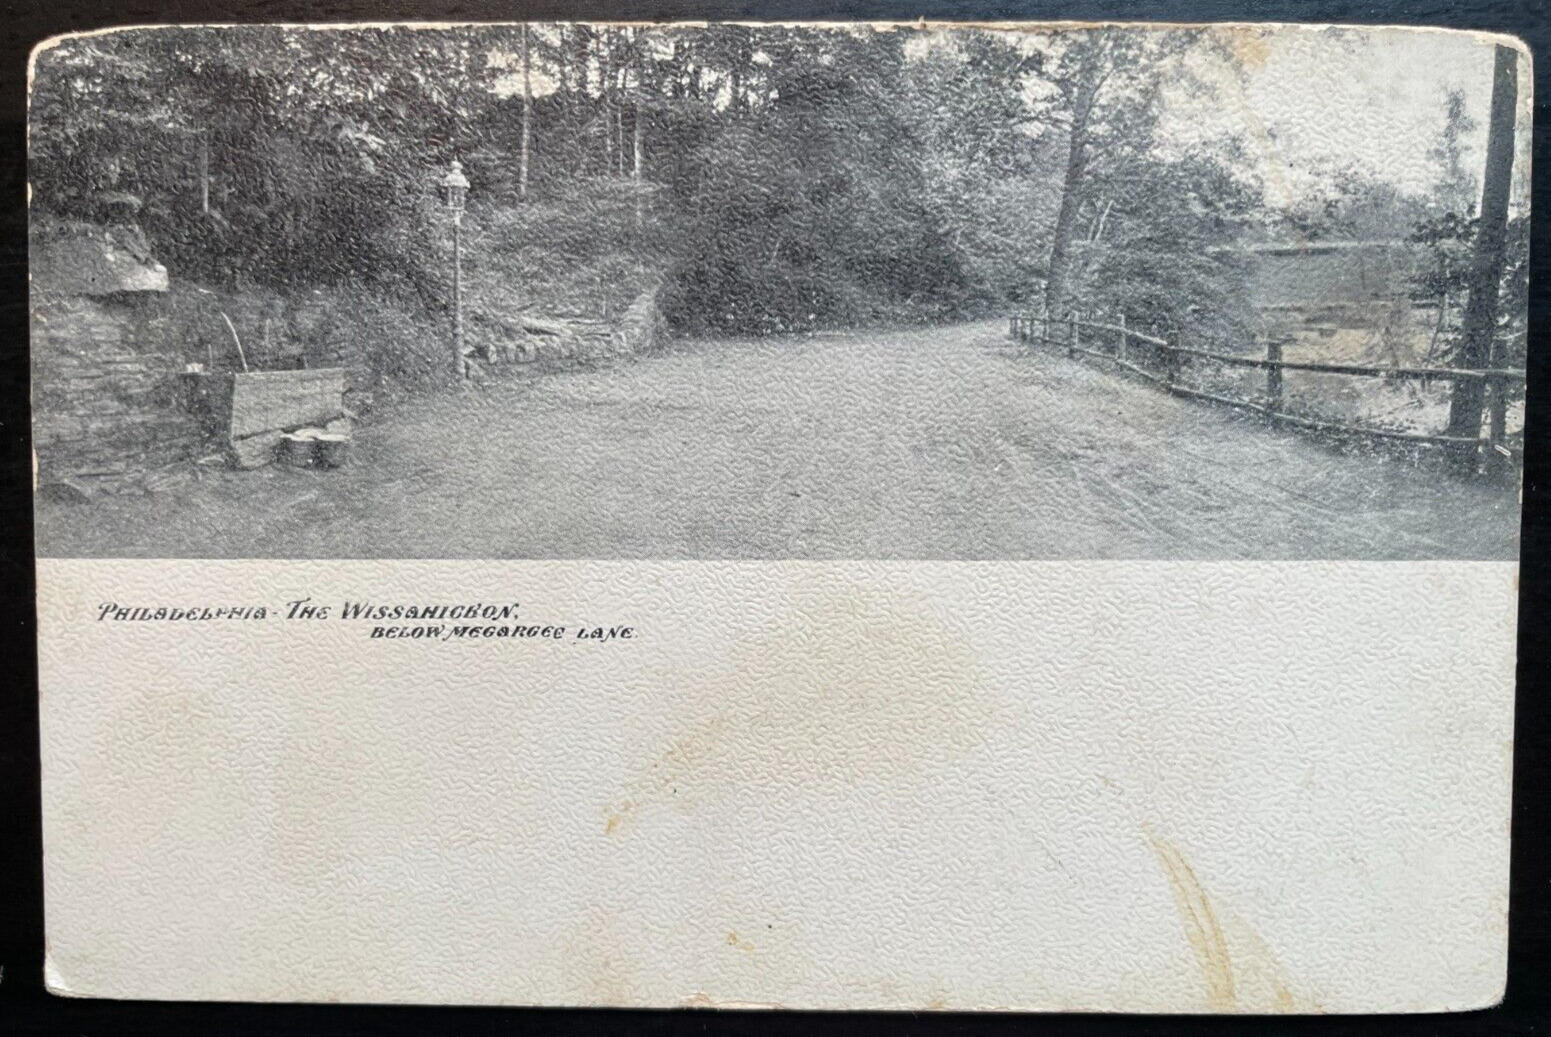 Vintage Postcard 1901-1907 Philadelphia to Wissahickon, below Megargee Lane